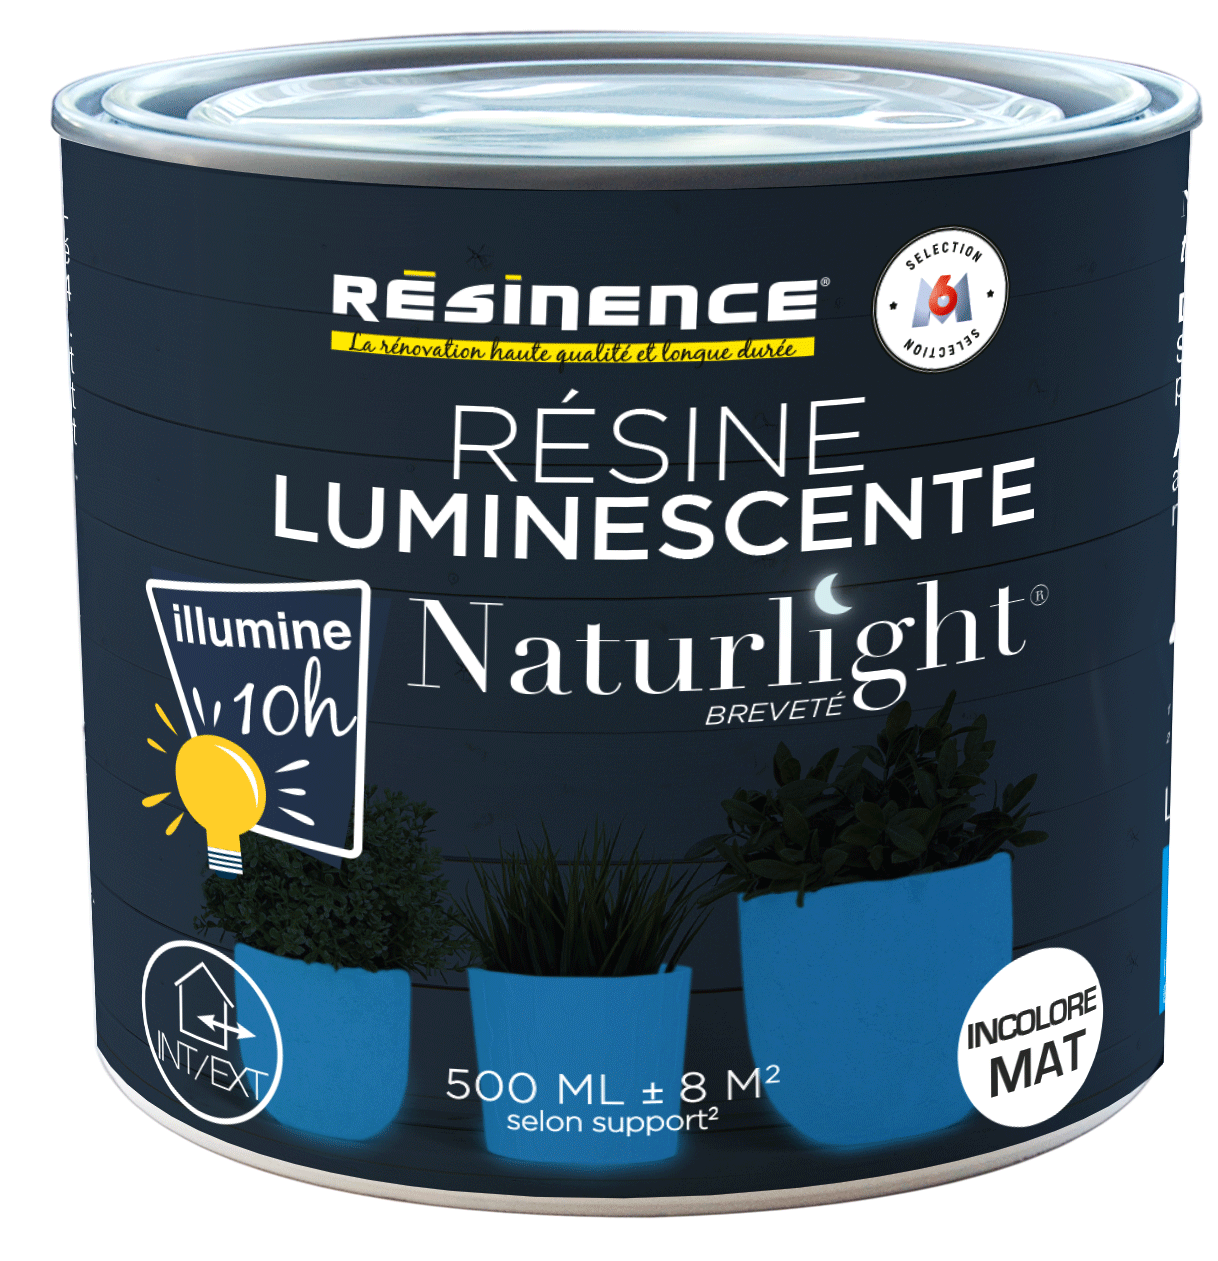 Résine luminescente Naturlight Incolore 500 ml - RESINENCE